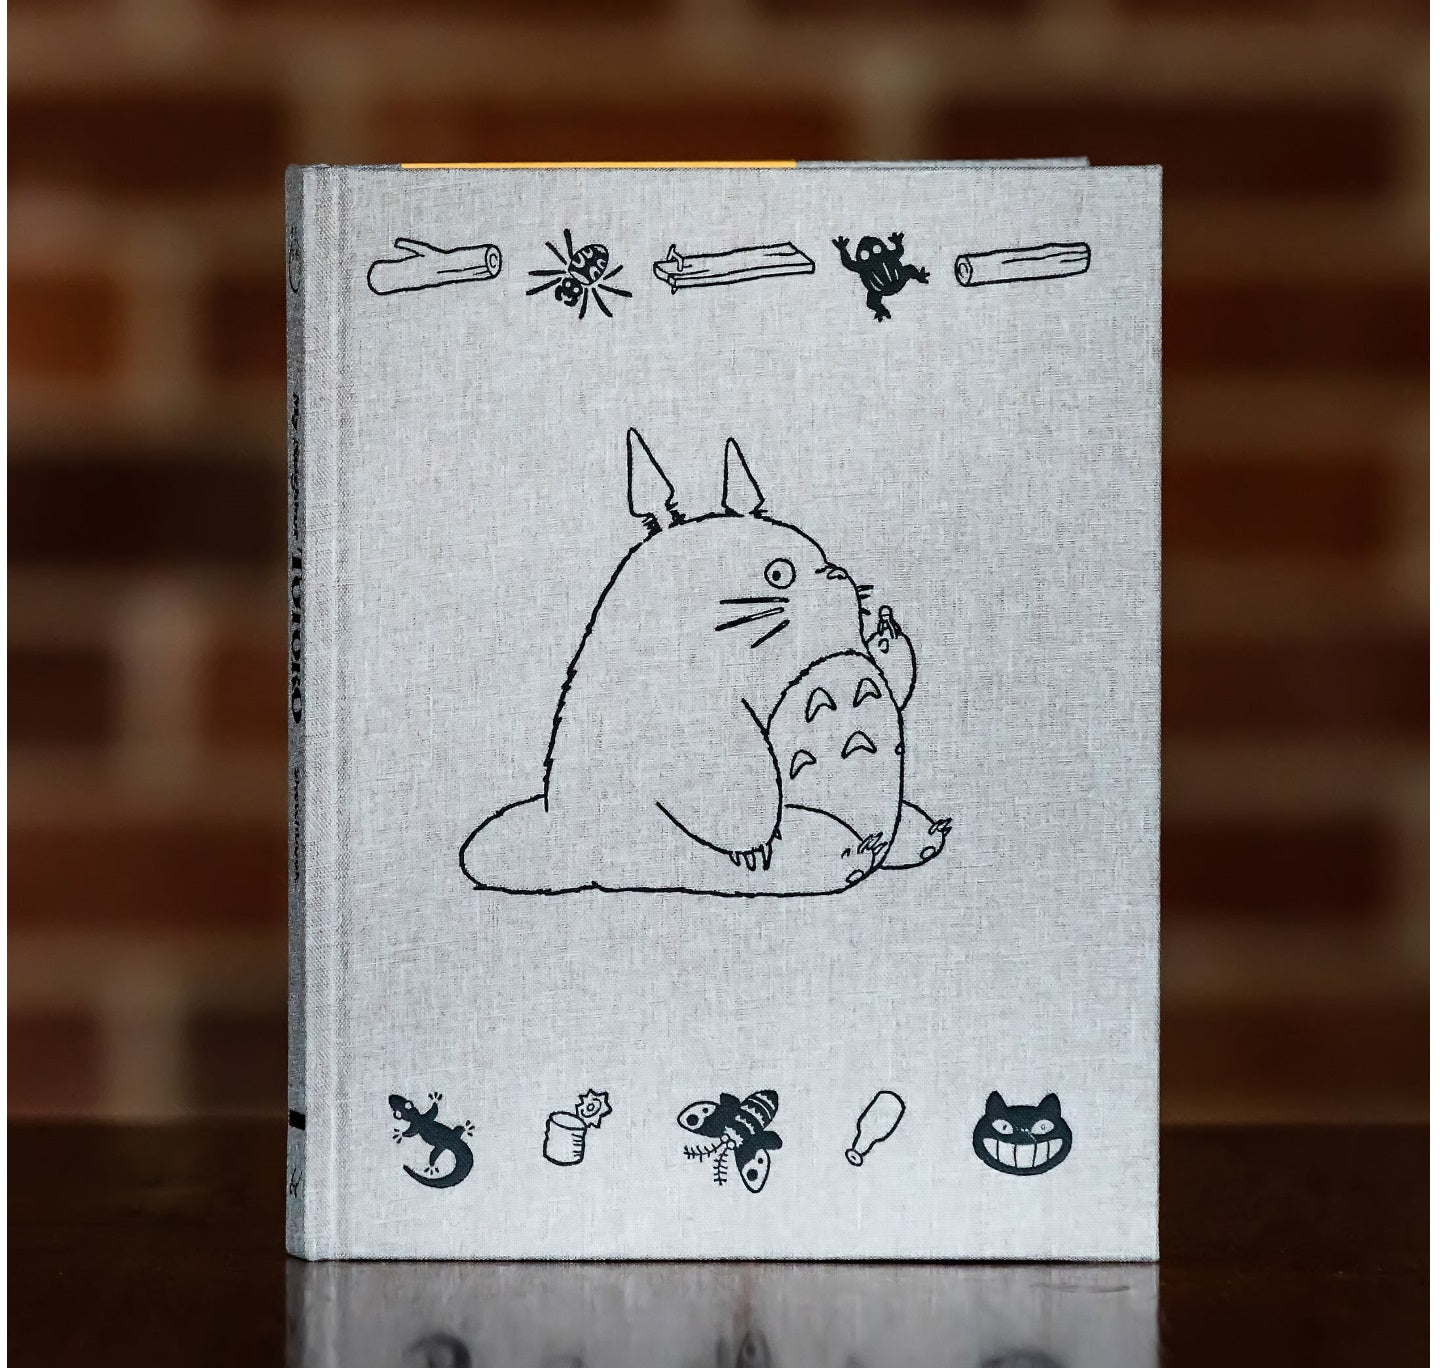 My Neighbor Totoro Sketchbook (Studio Ghibli x Chronicle Books) (Diary)